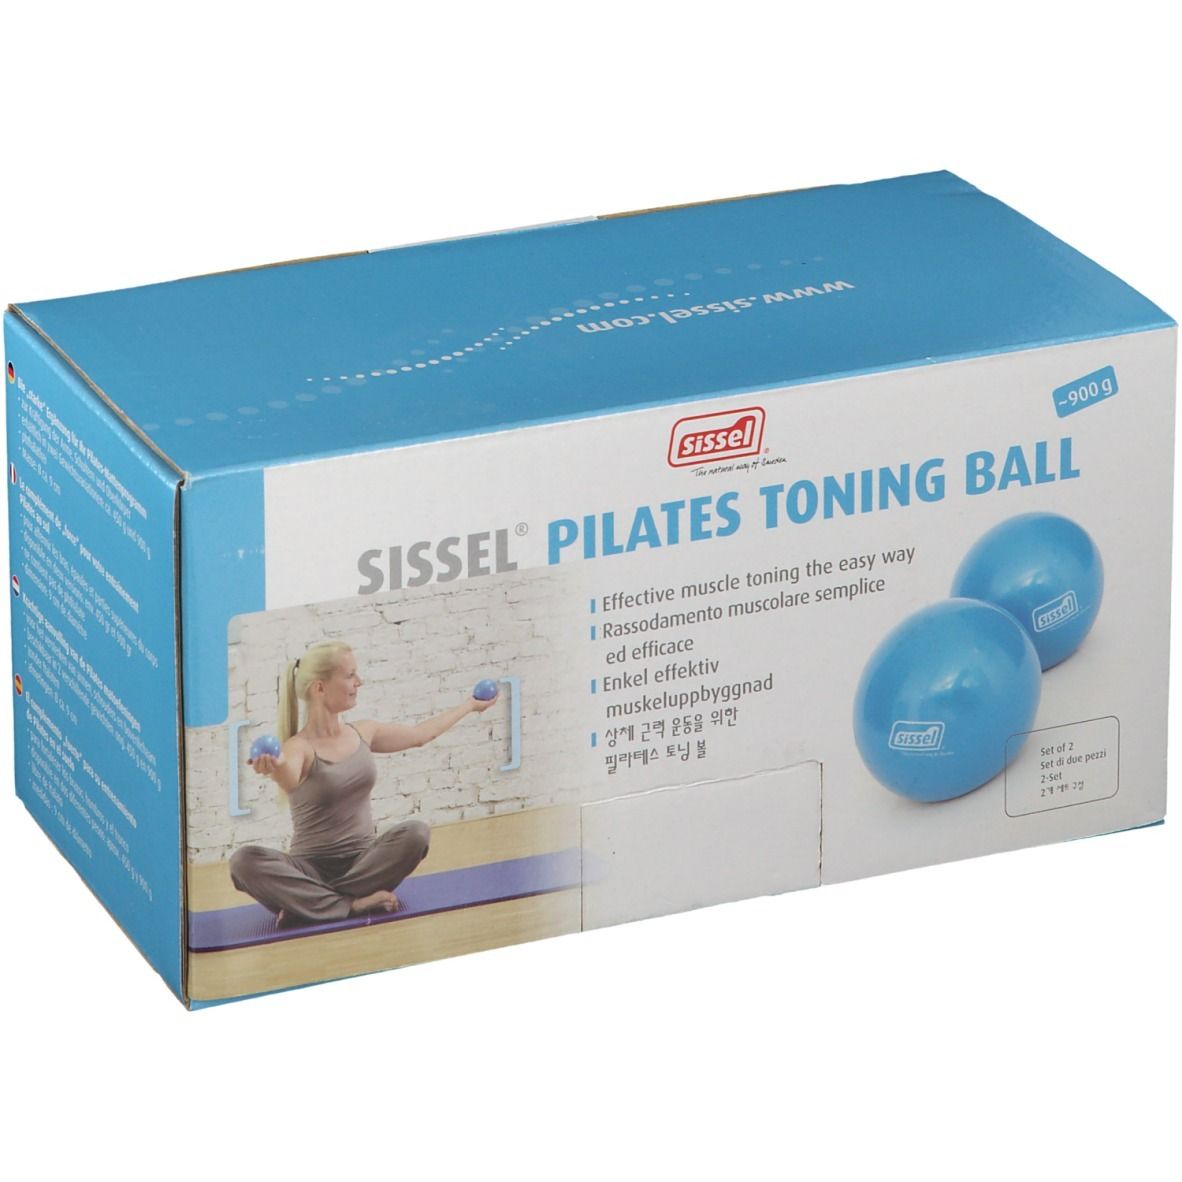 Sissel® Pilates Toning Ball 900 g